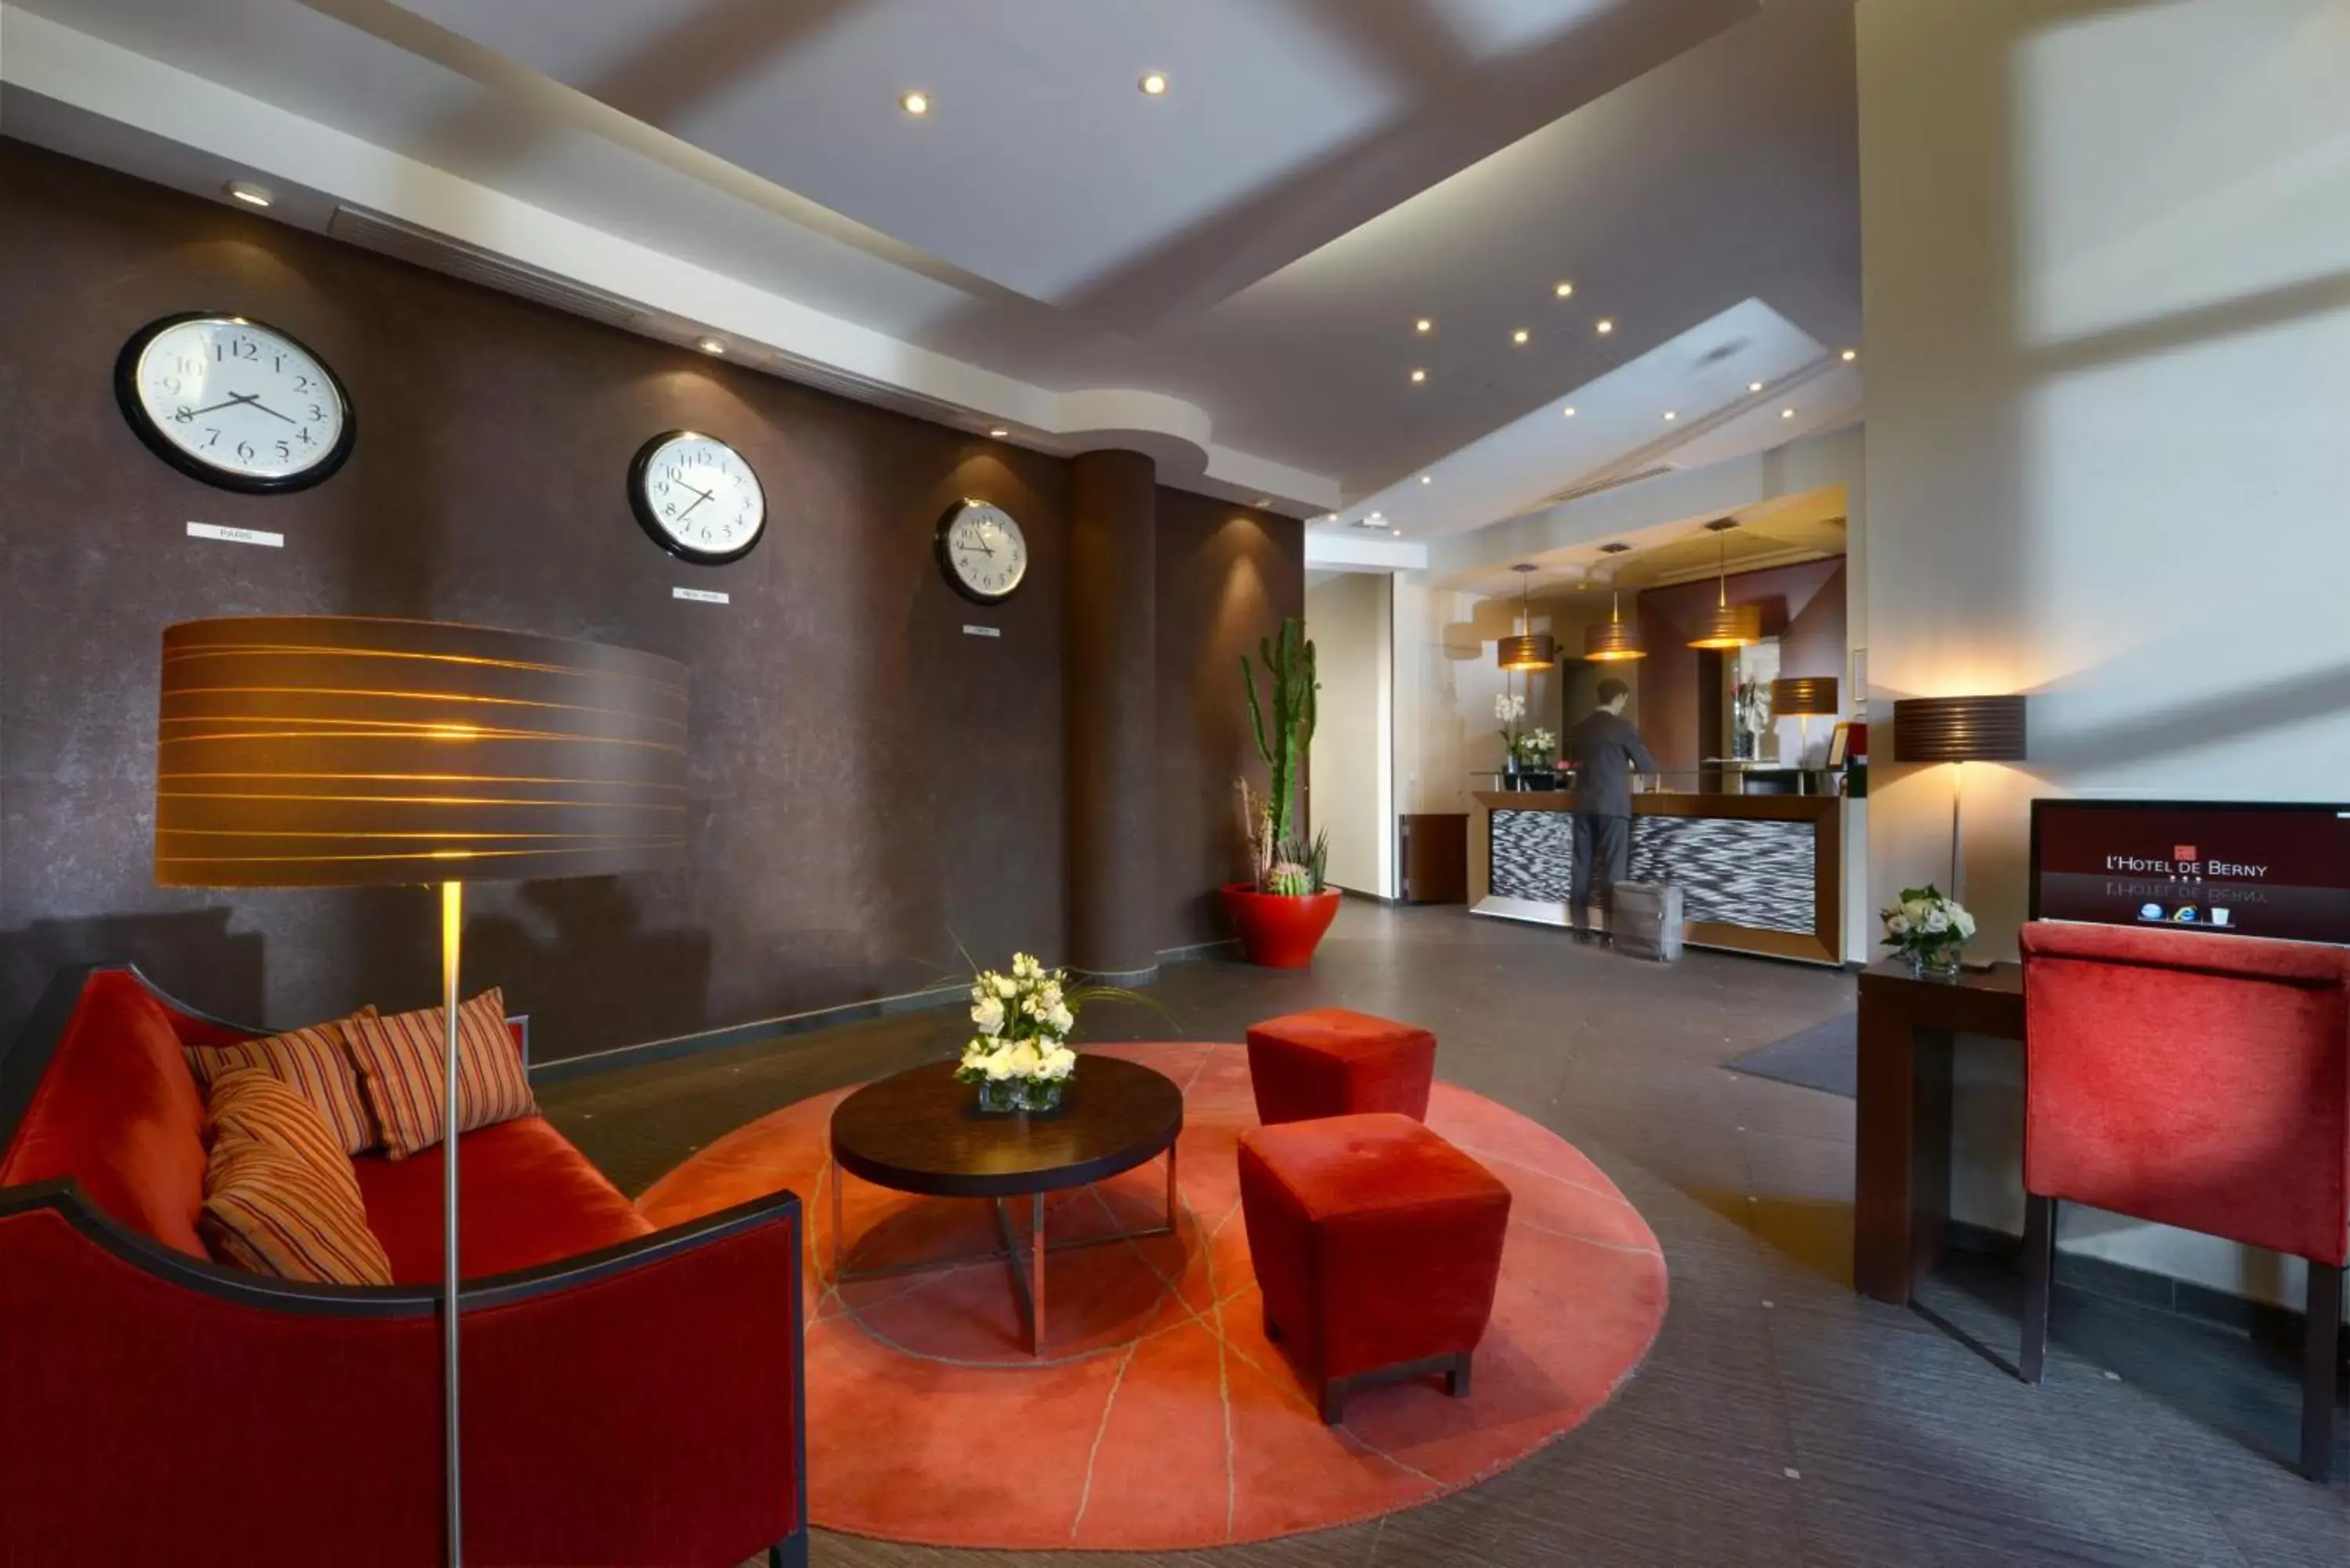 Lobby or reception, Lobby/Reception in Hotel de Berny